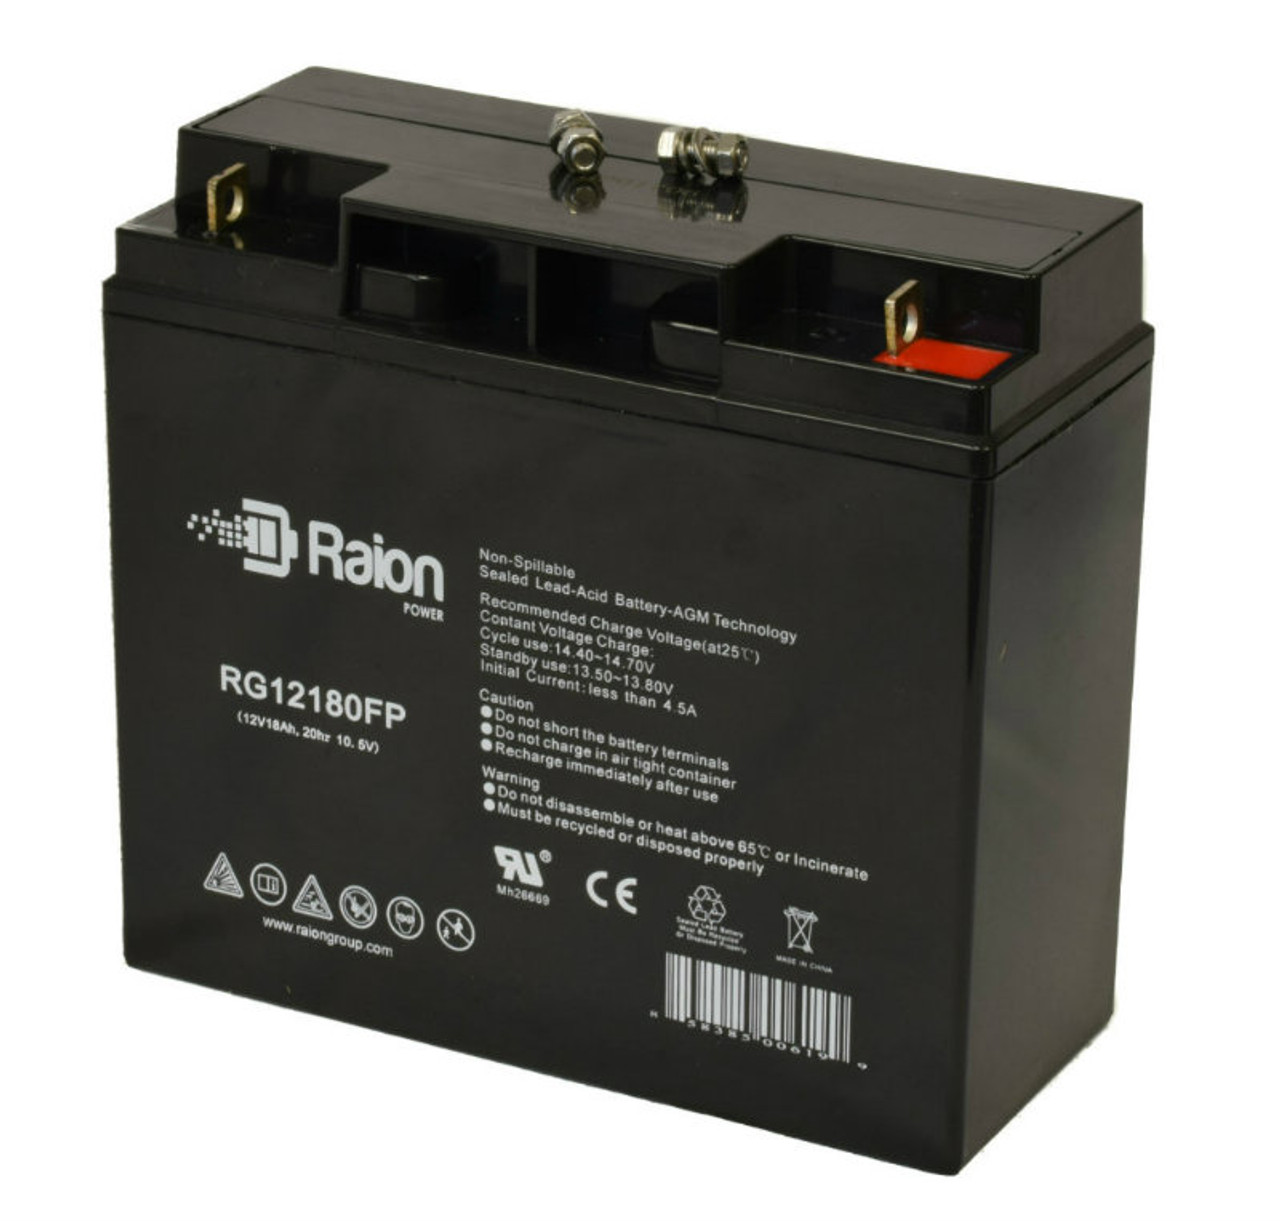 Raion Power Replacement 12V 18Ah Emergency Light Battery for Sure-Lites / Cooper Lighting SL-26-11 - 1 Pack